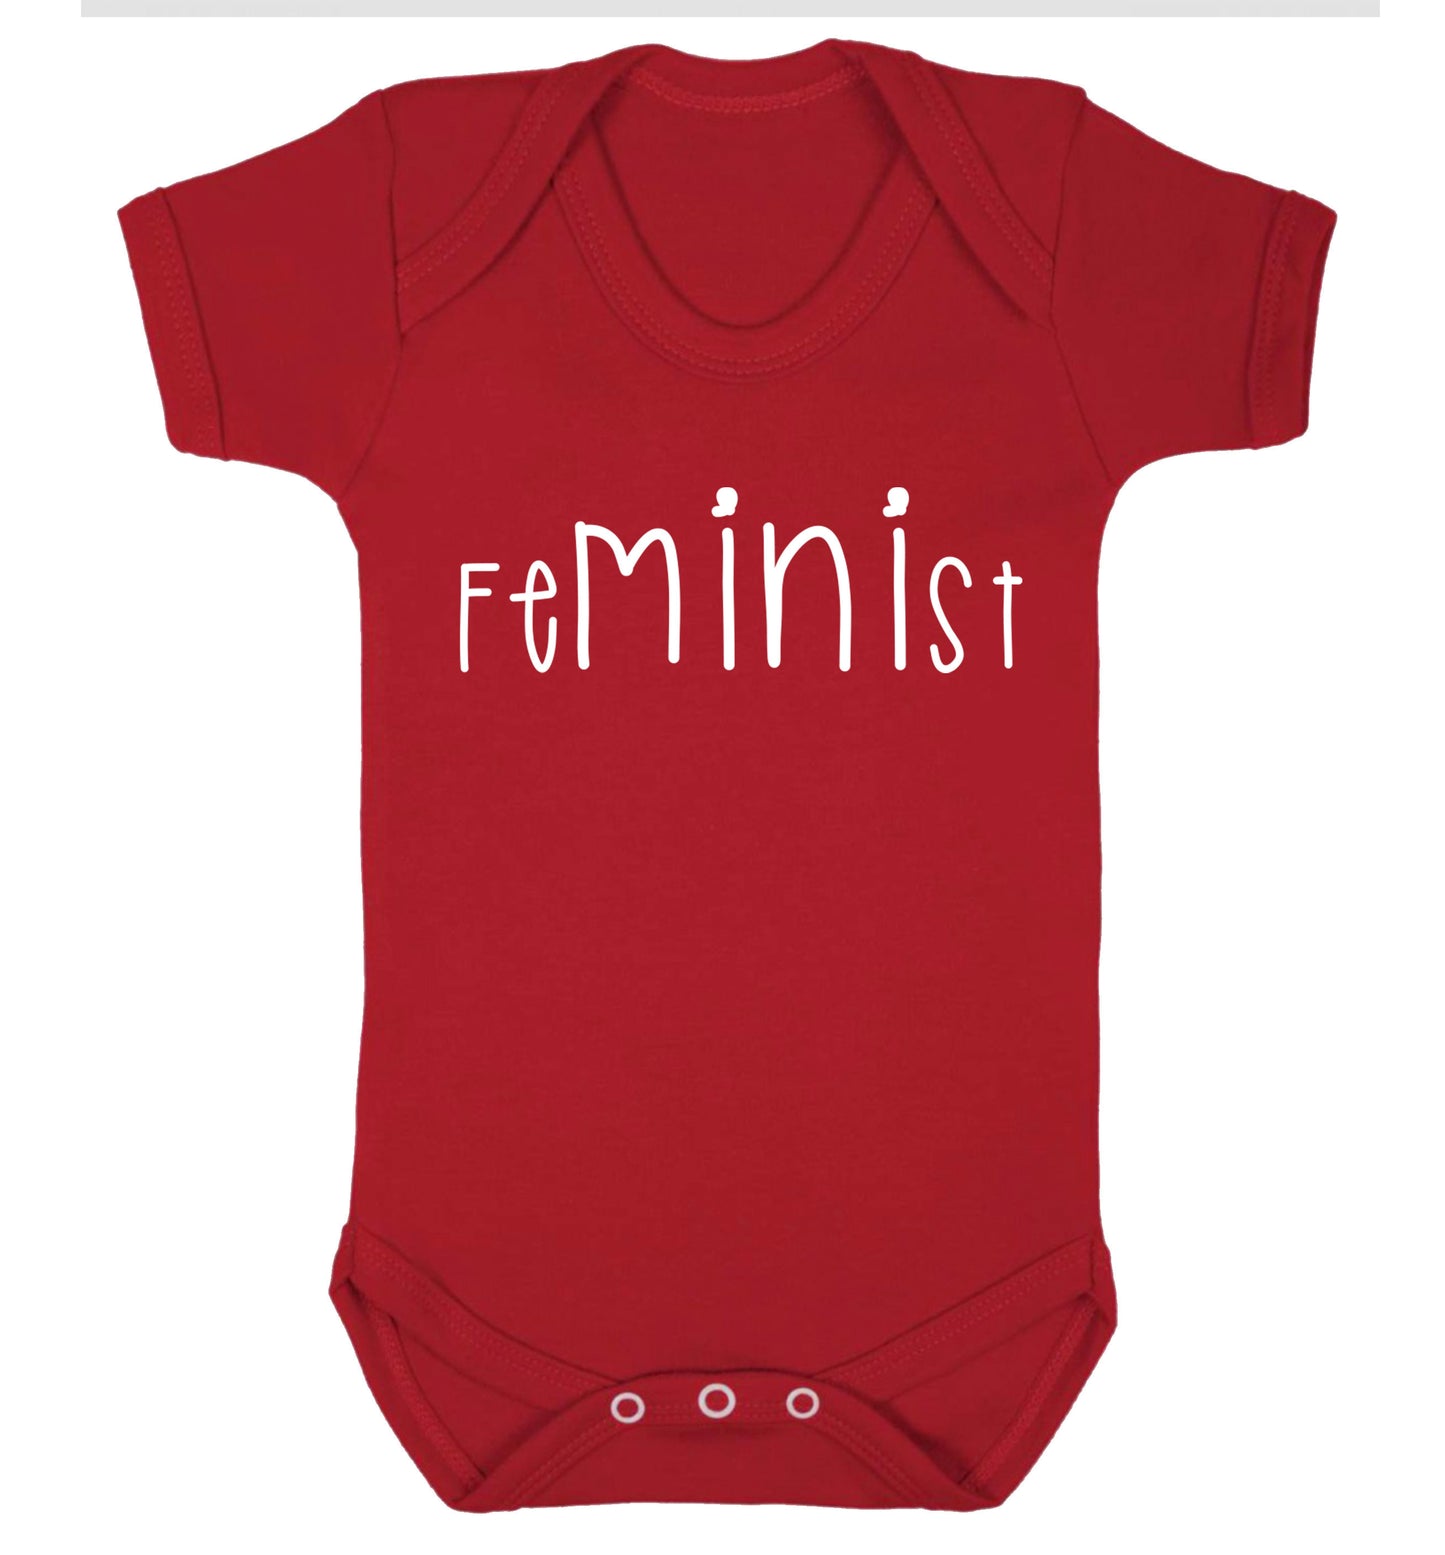 FeMINIst Baby Vest red 18-24 months